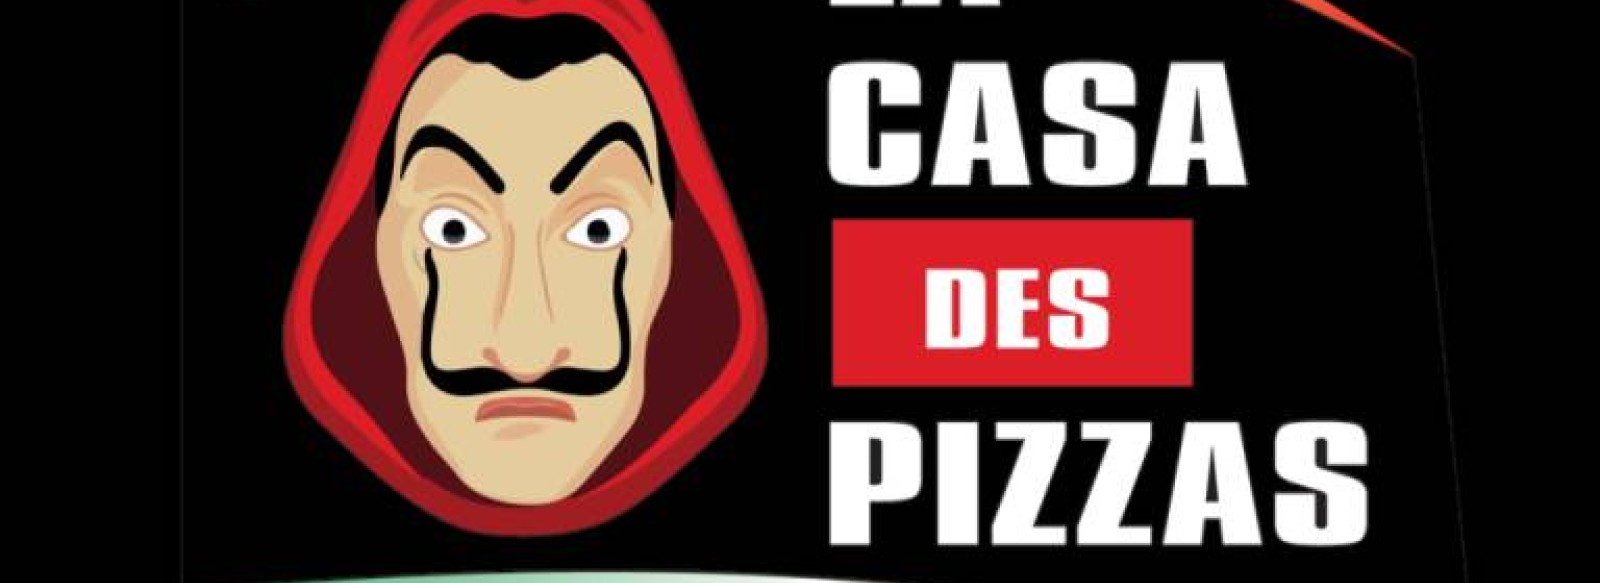 LA CASA DES PIZZAS